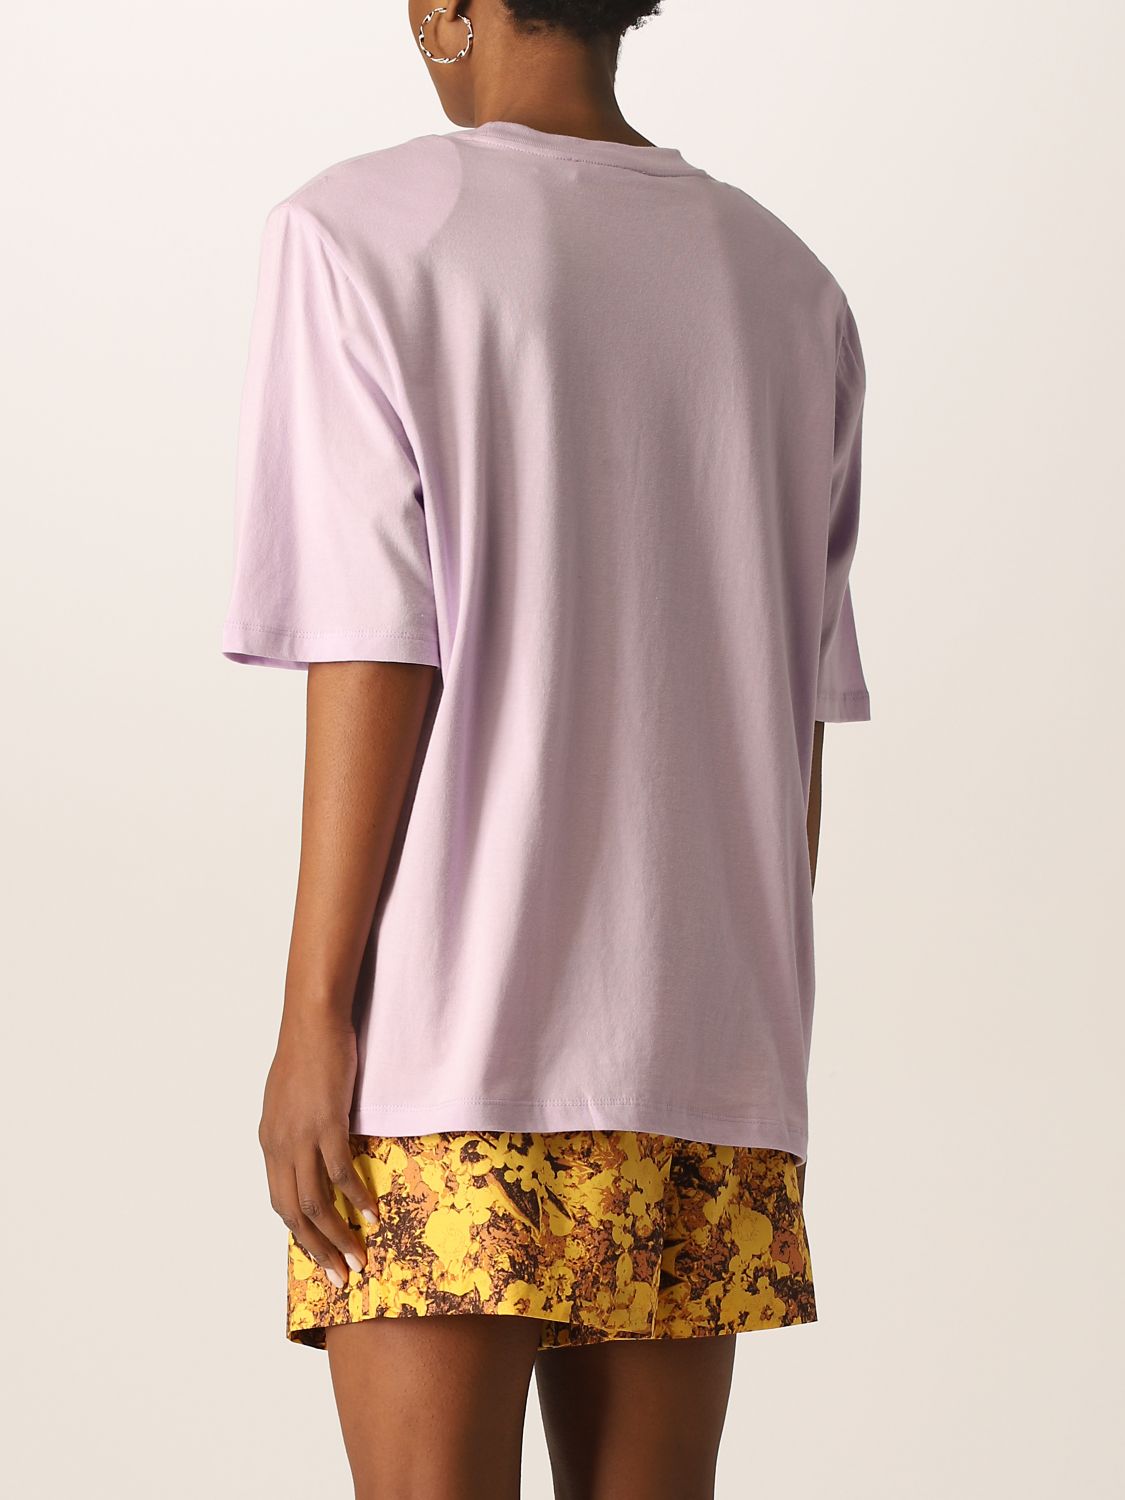 T恤 Remain: Remaint恤女士 紫色 3